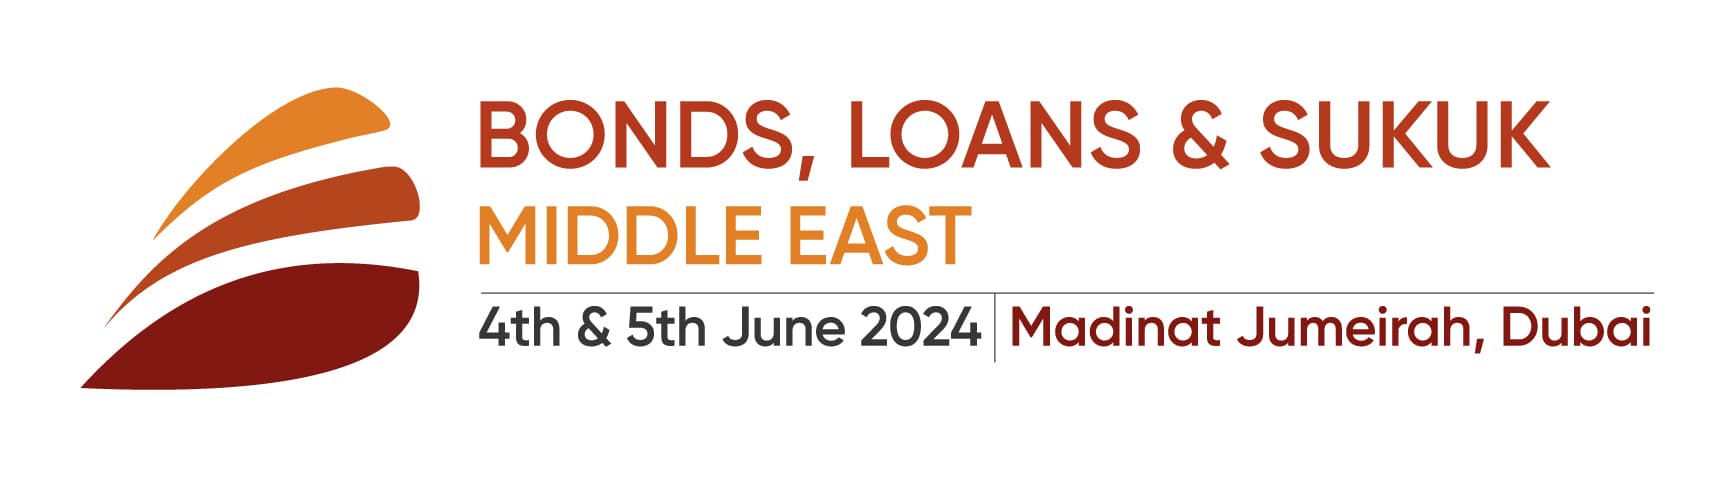 Bonds, Loans & Sukuk Middle East 2024